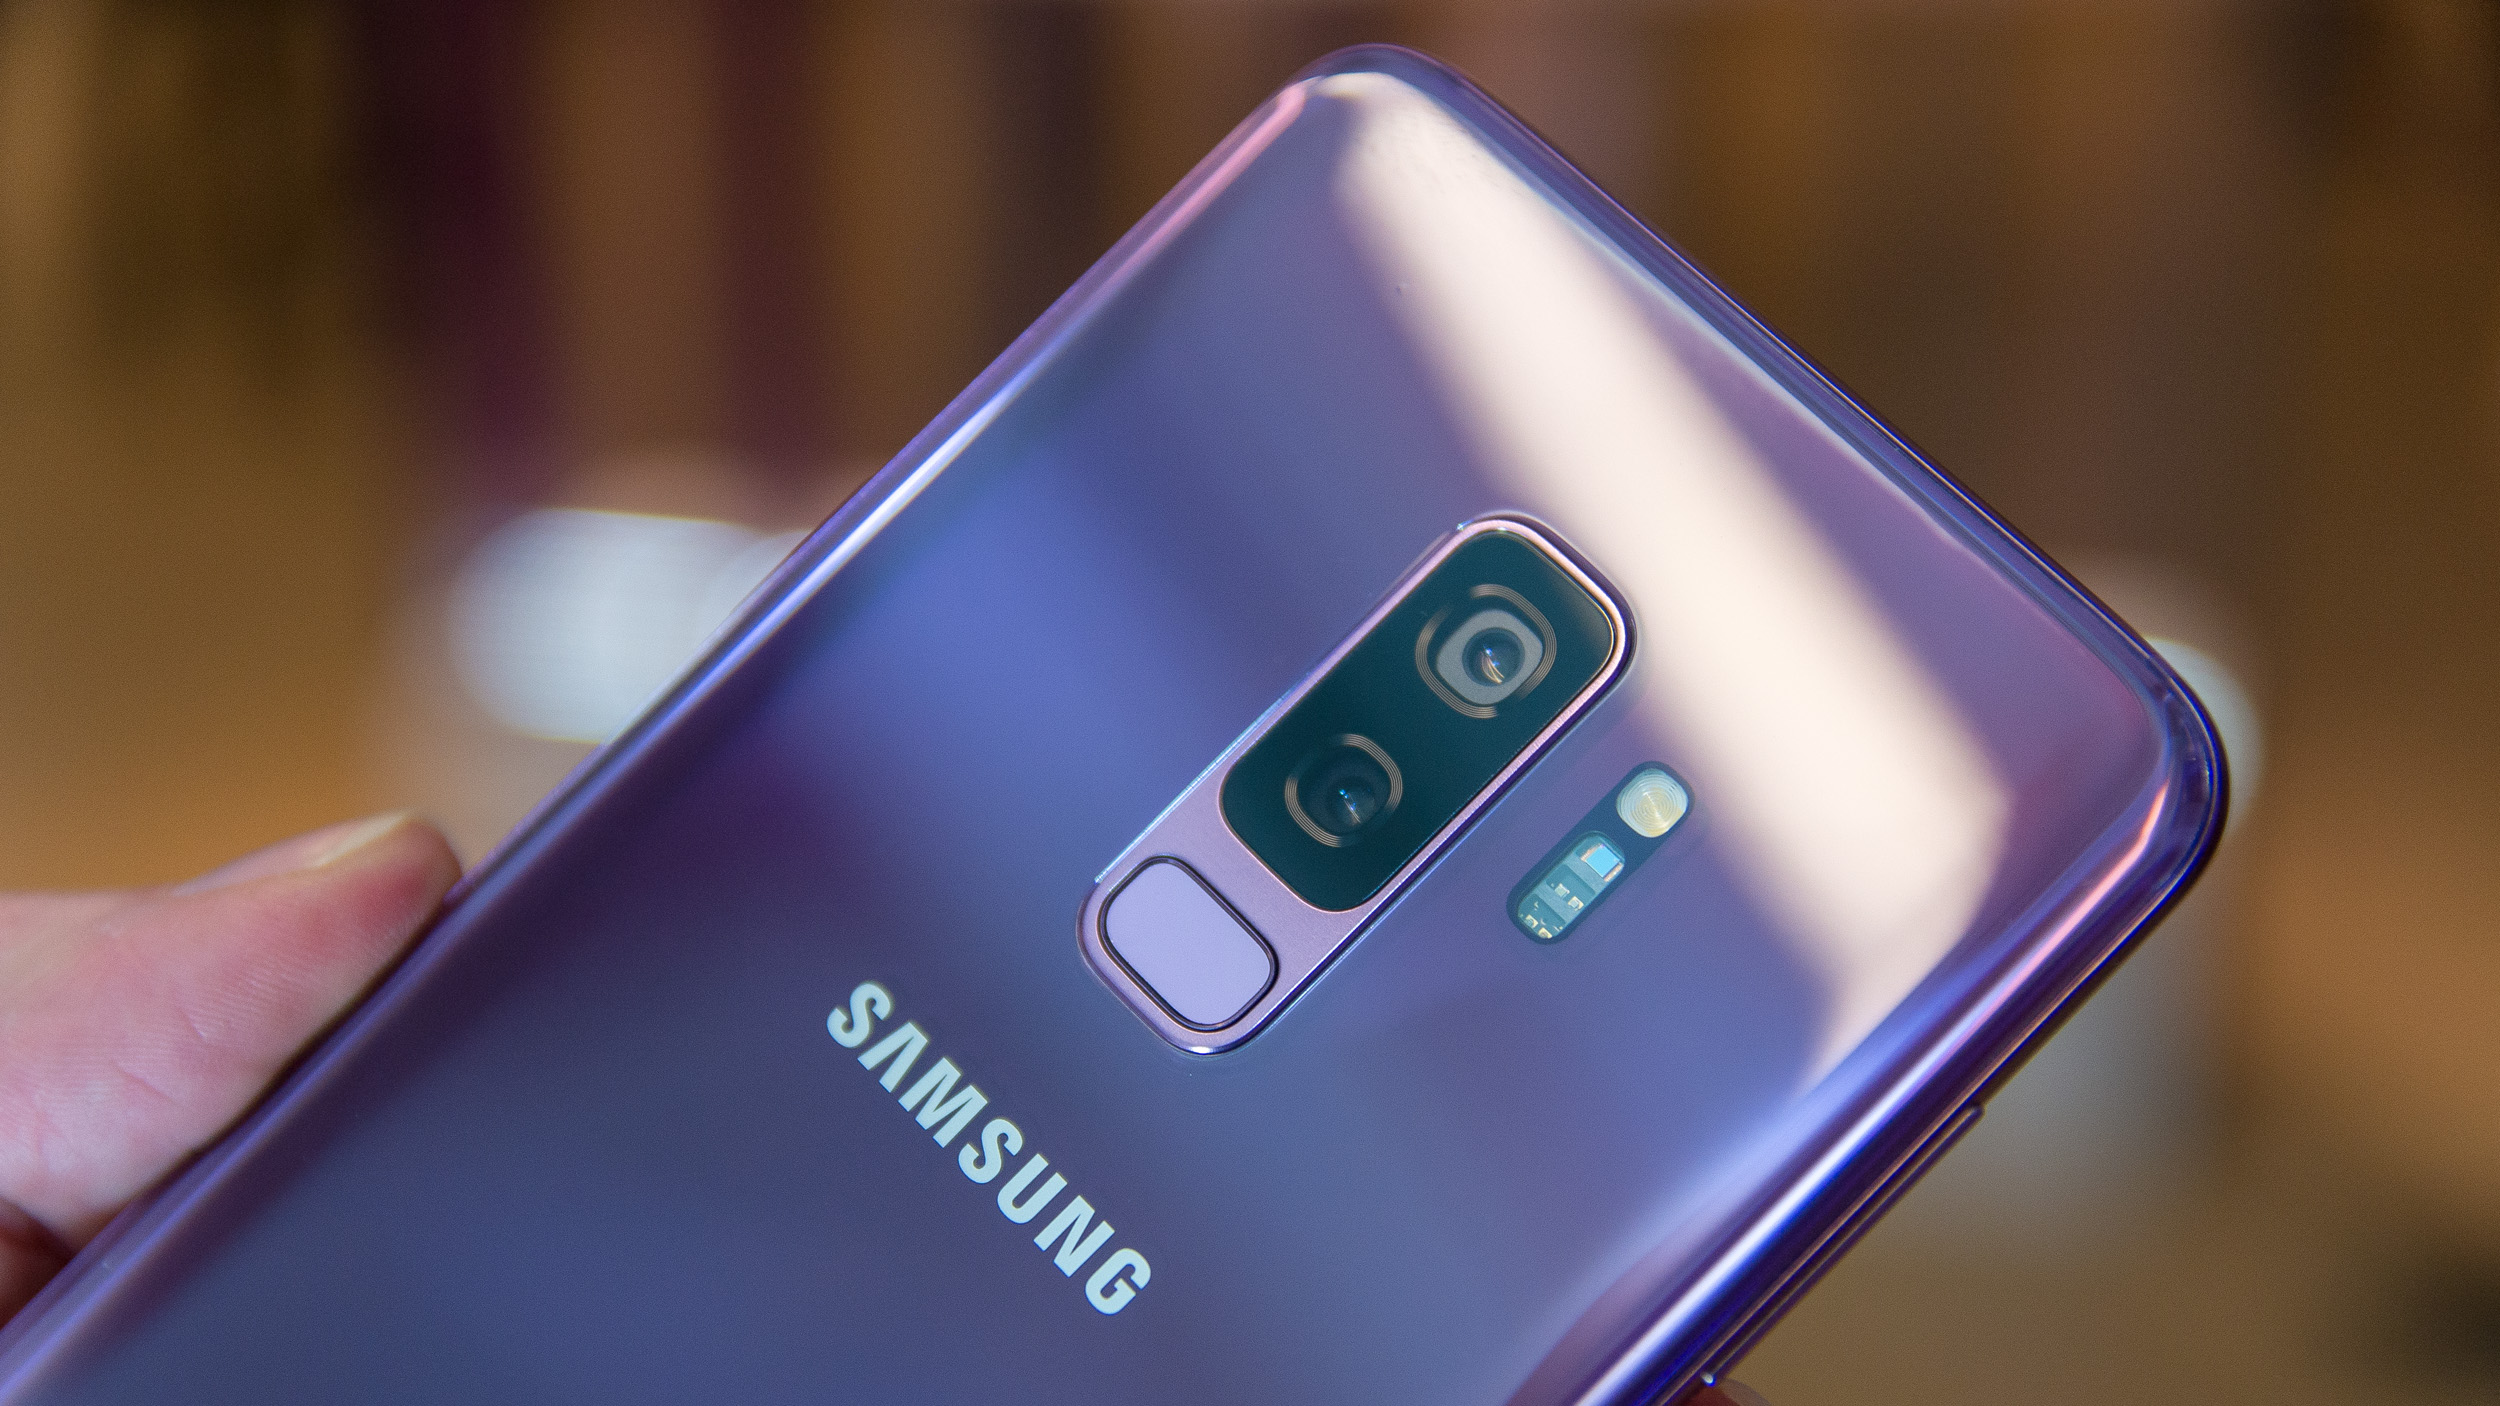 Recenzie Samsung Galaxy S9 Plus: Un telefon grozav cu defecte minore